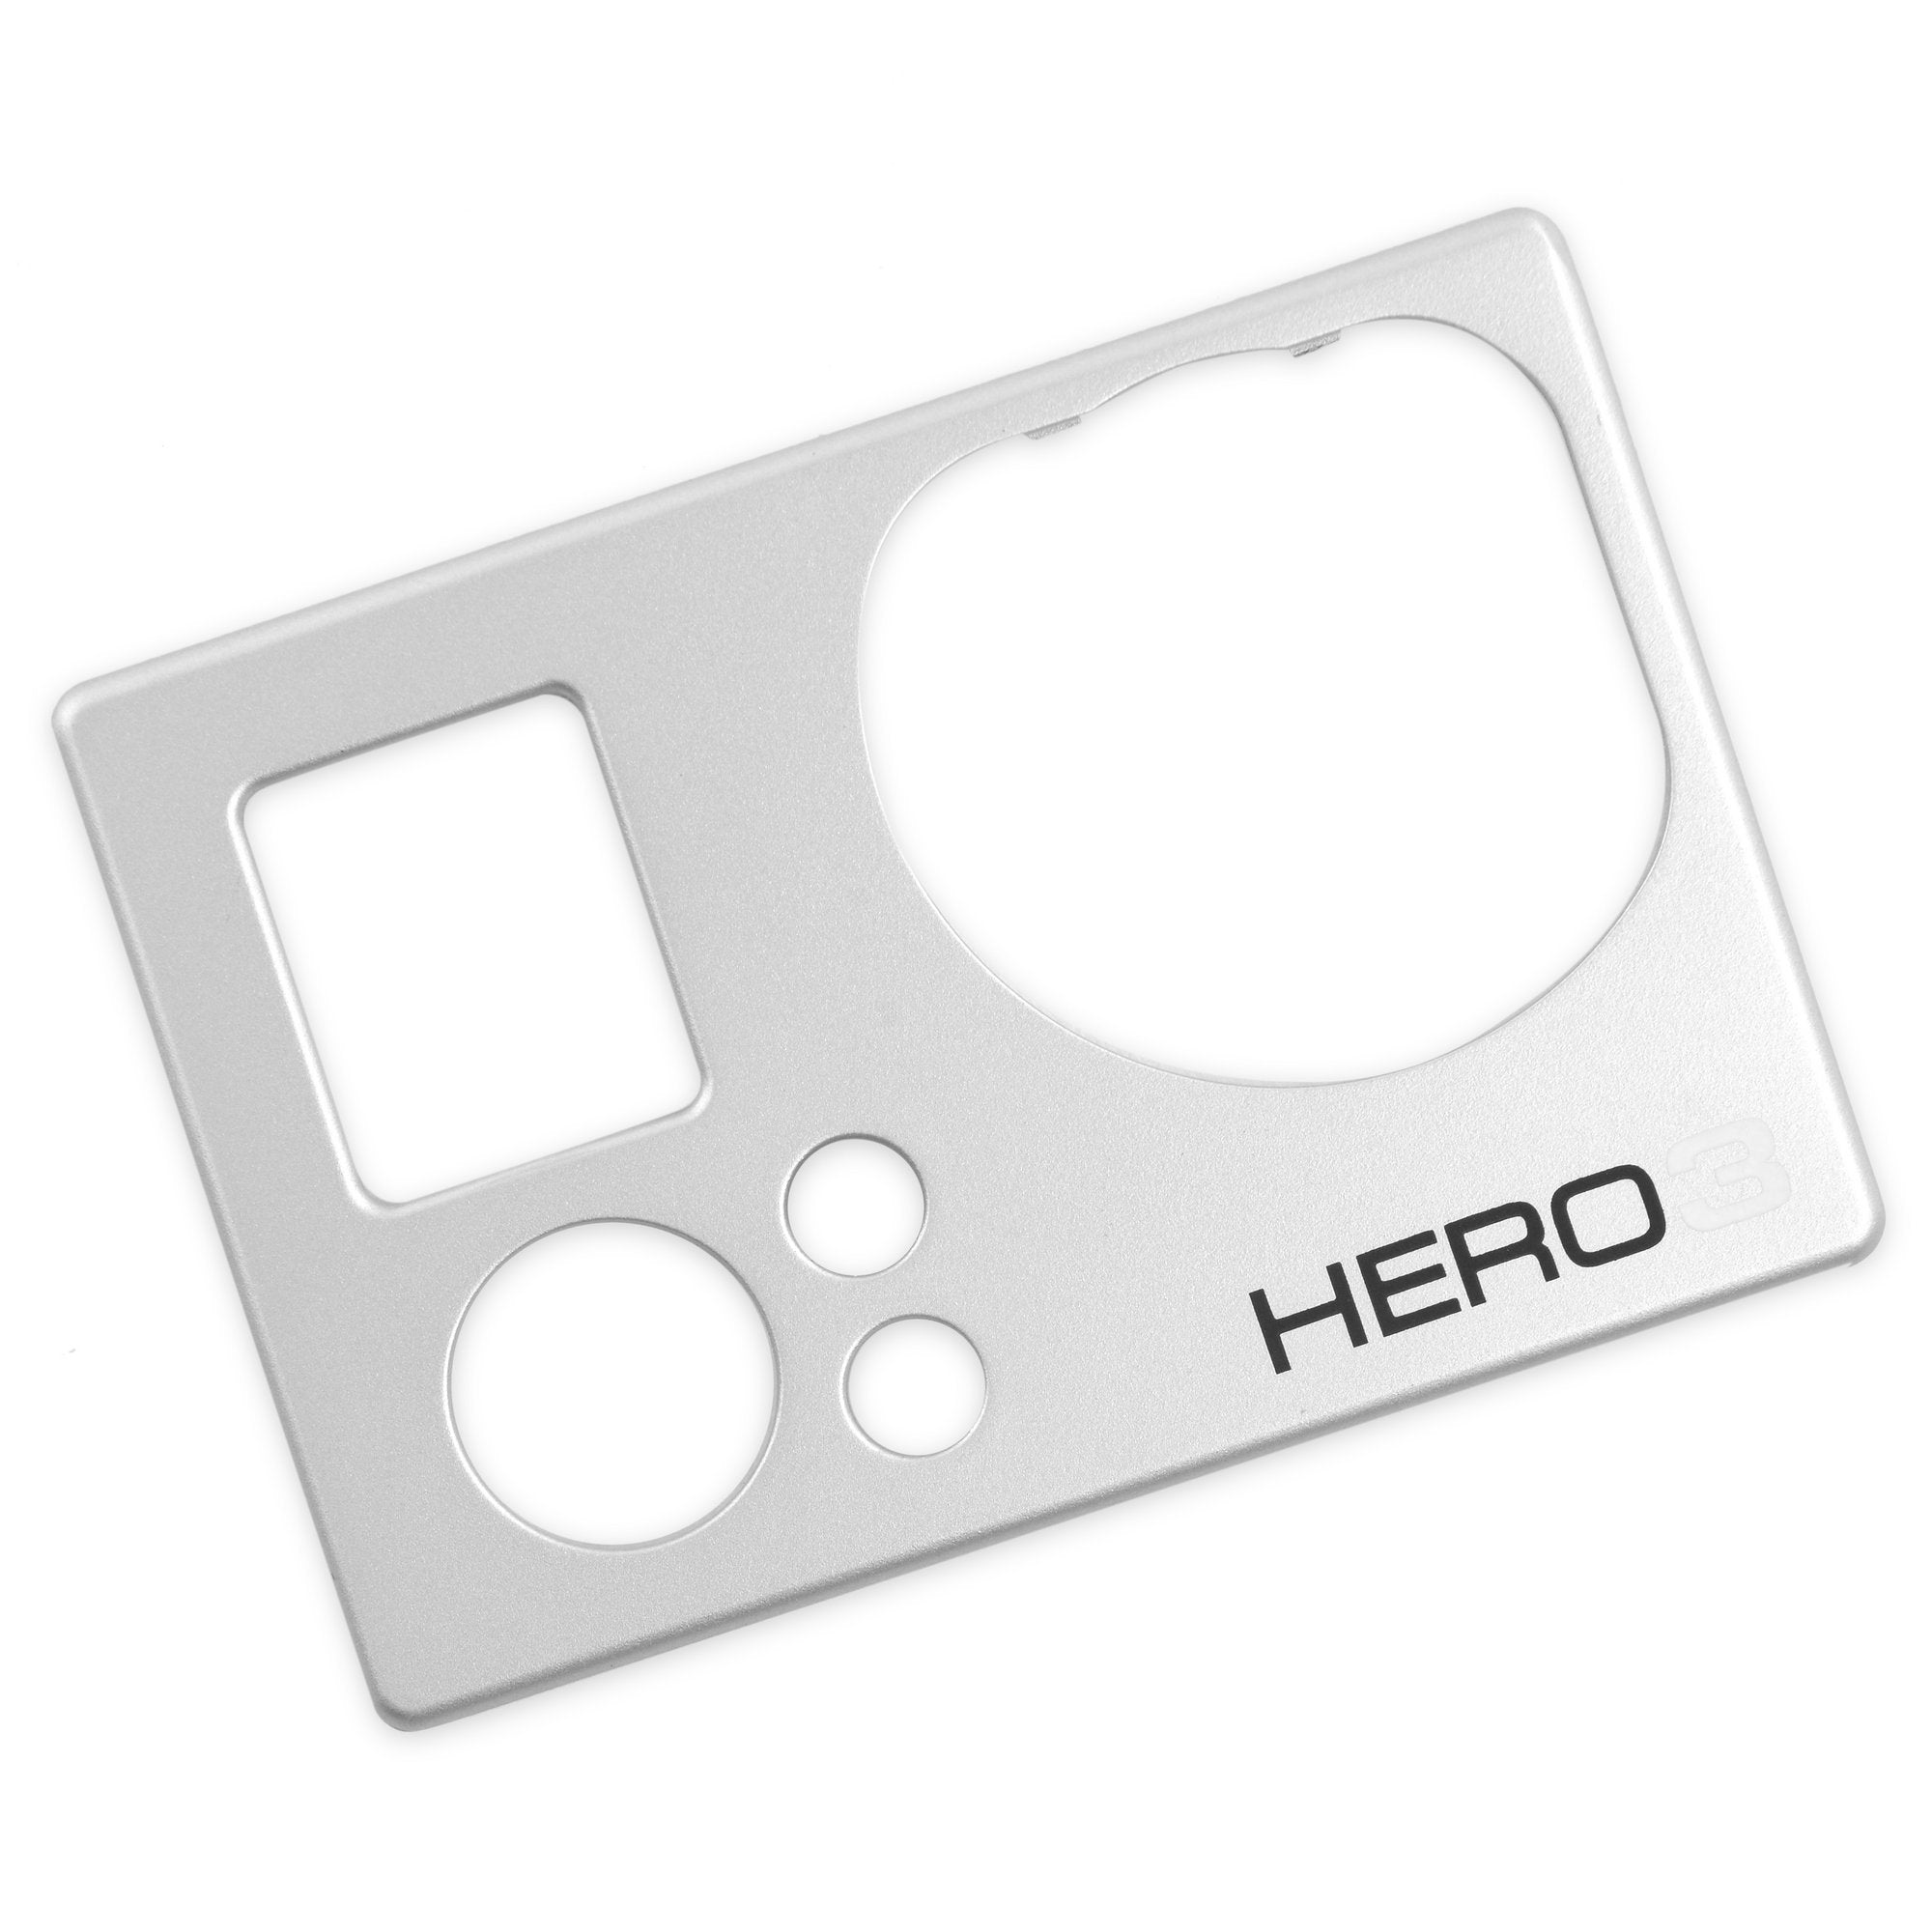 GoPro Hero3 White Front Panel